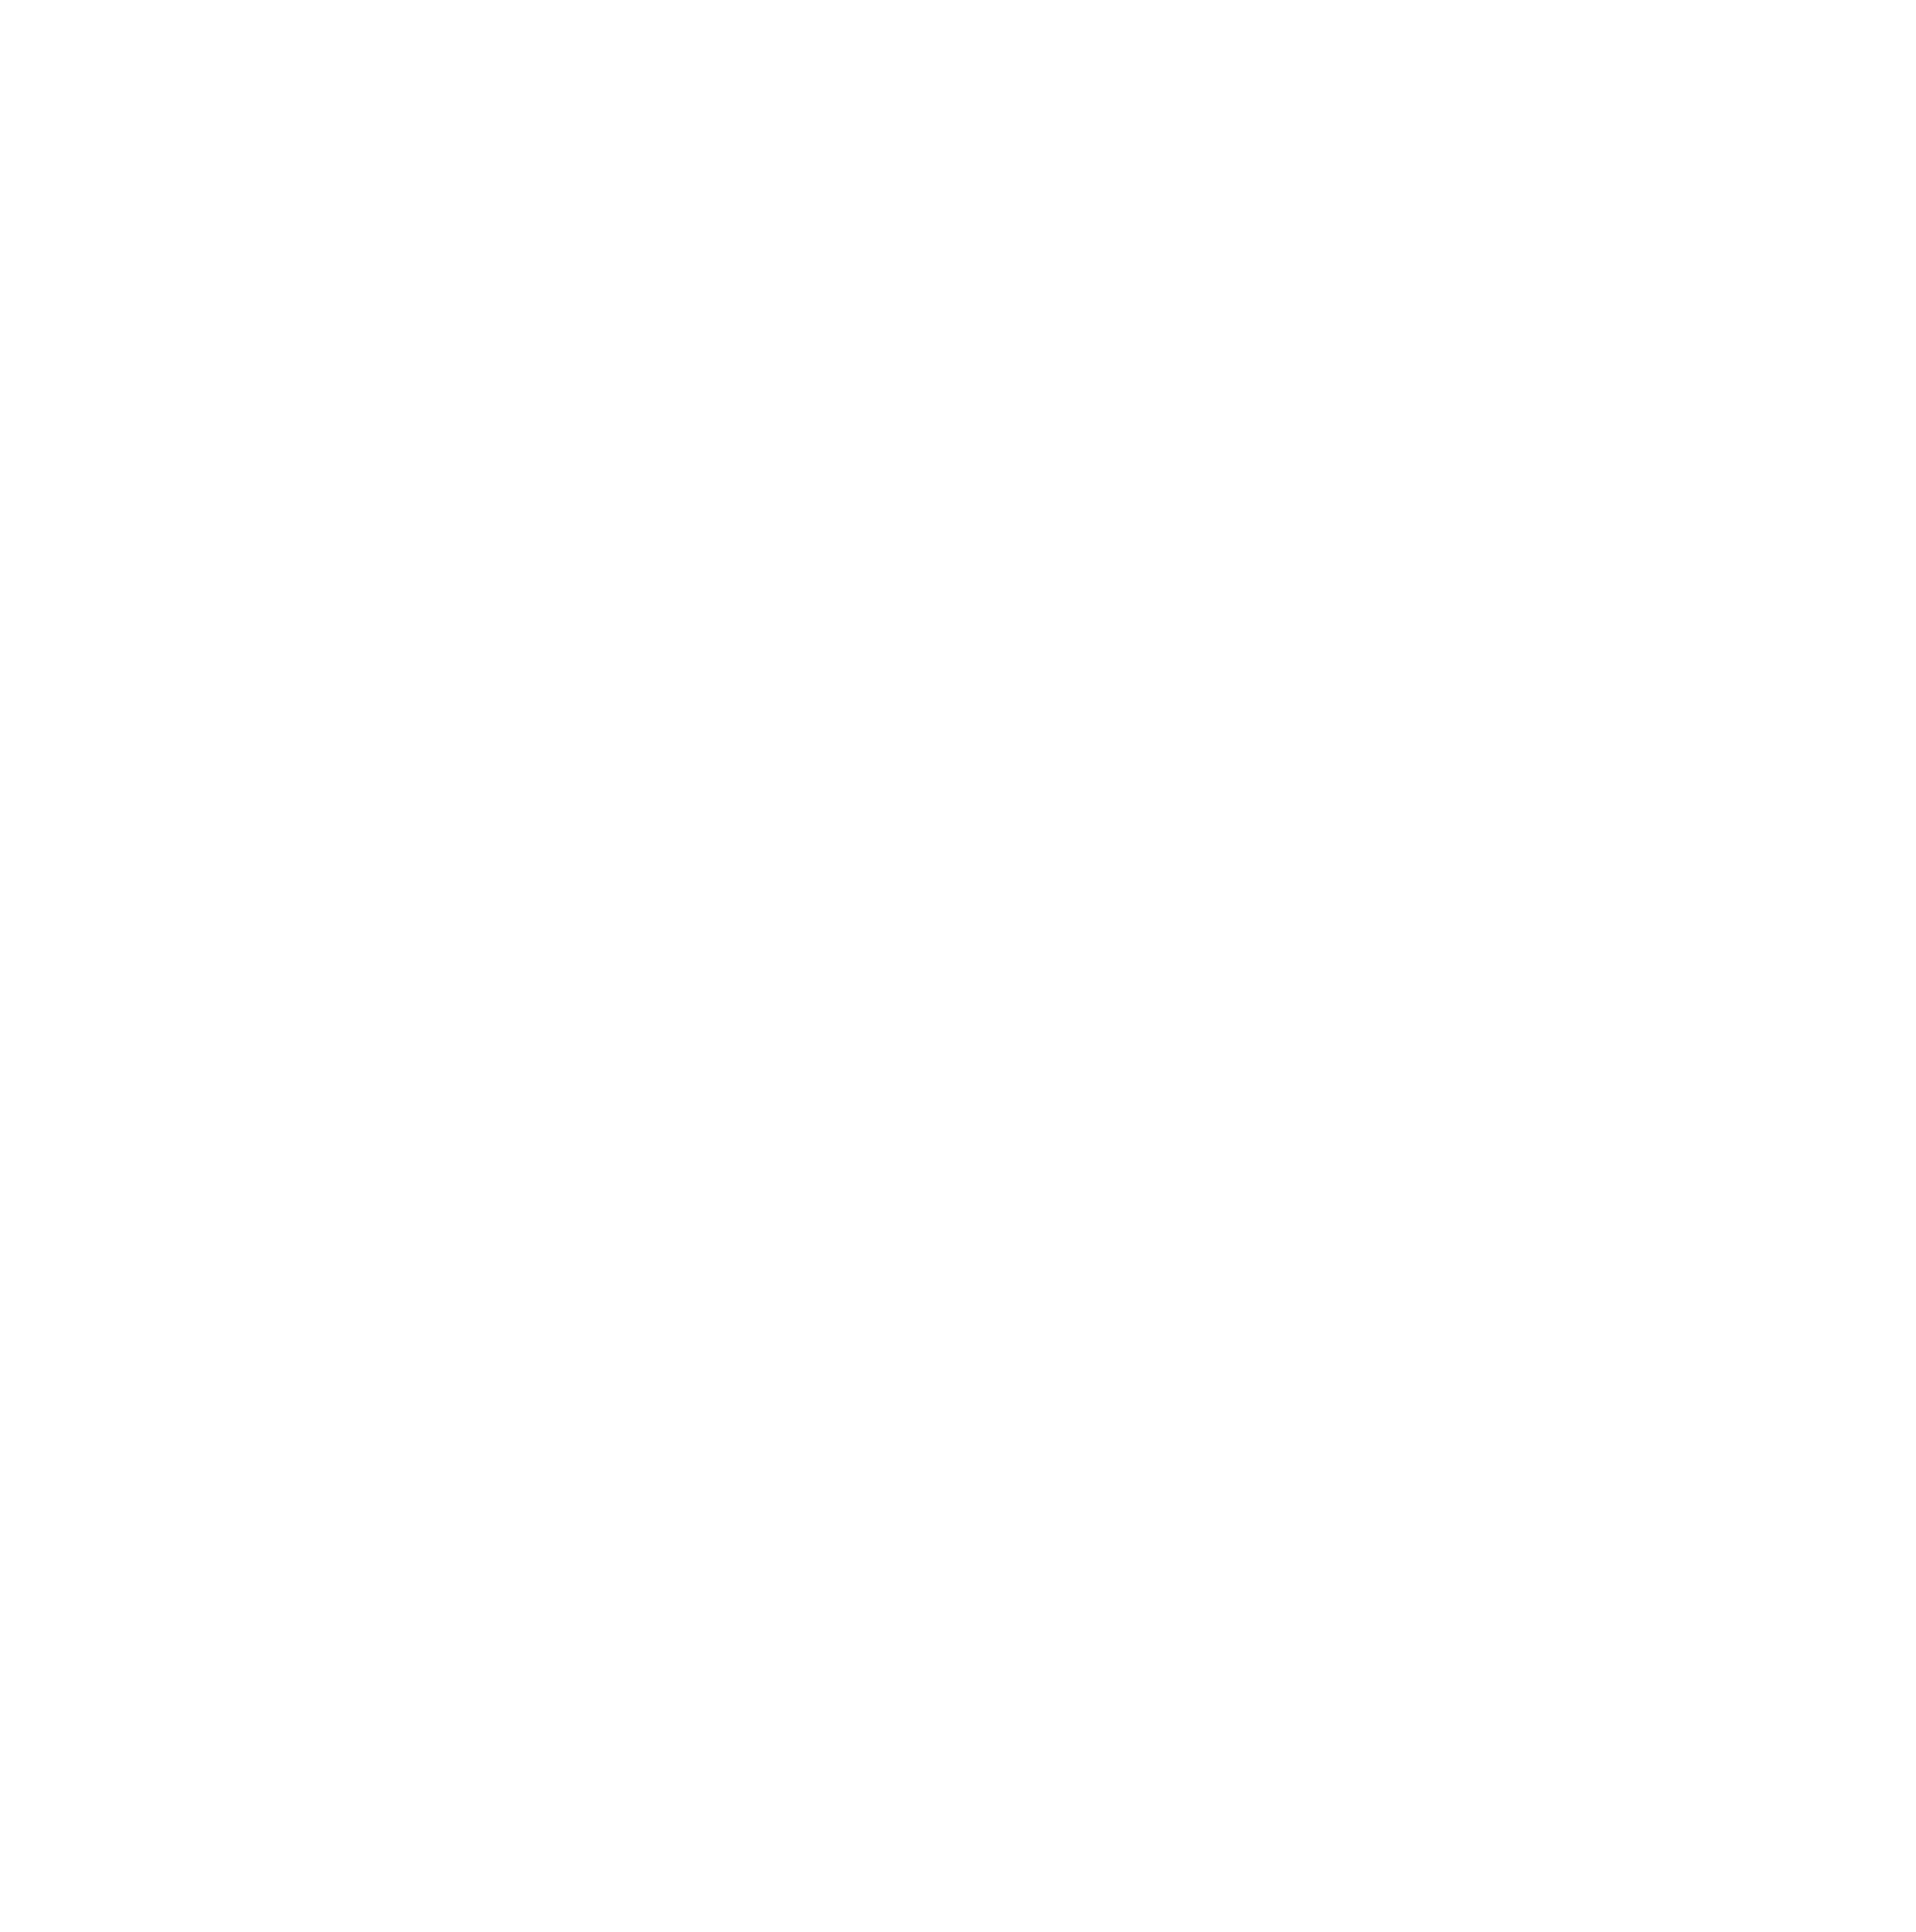 Chief Cornerstone Temple Court Church Government in Griffin